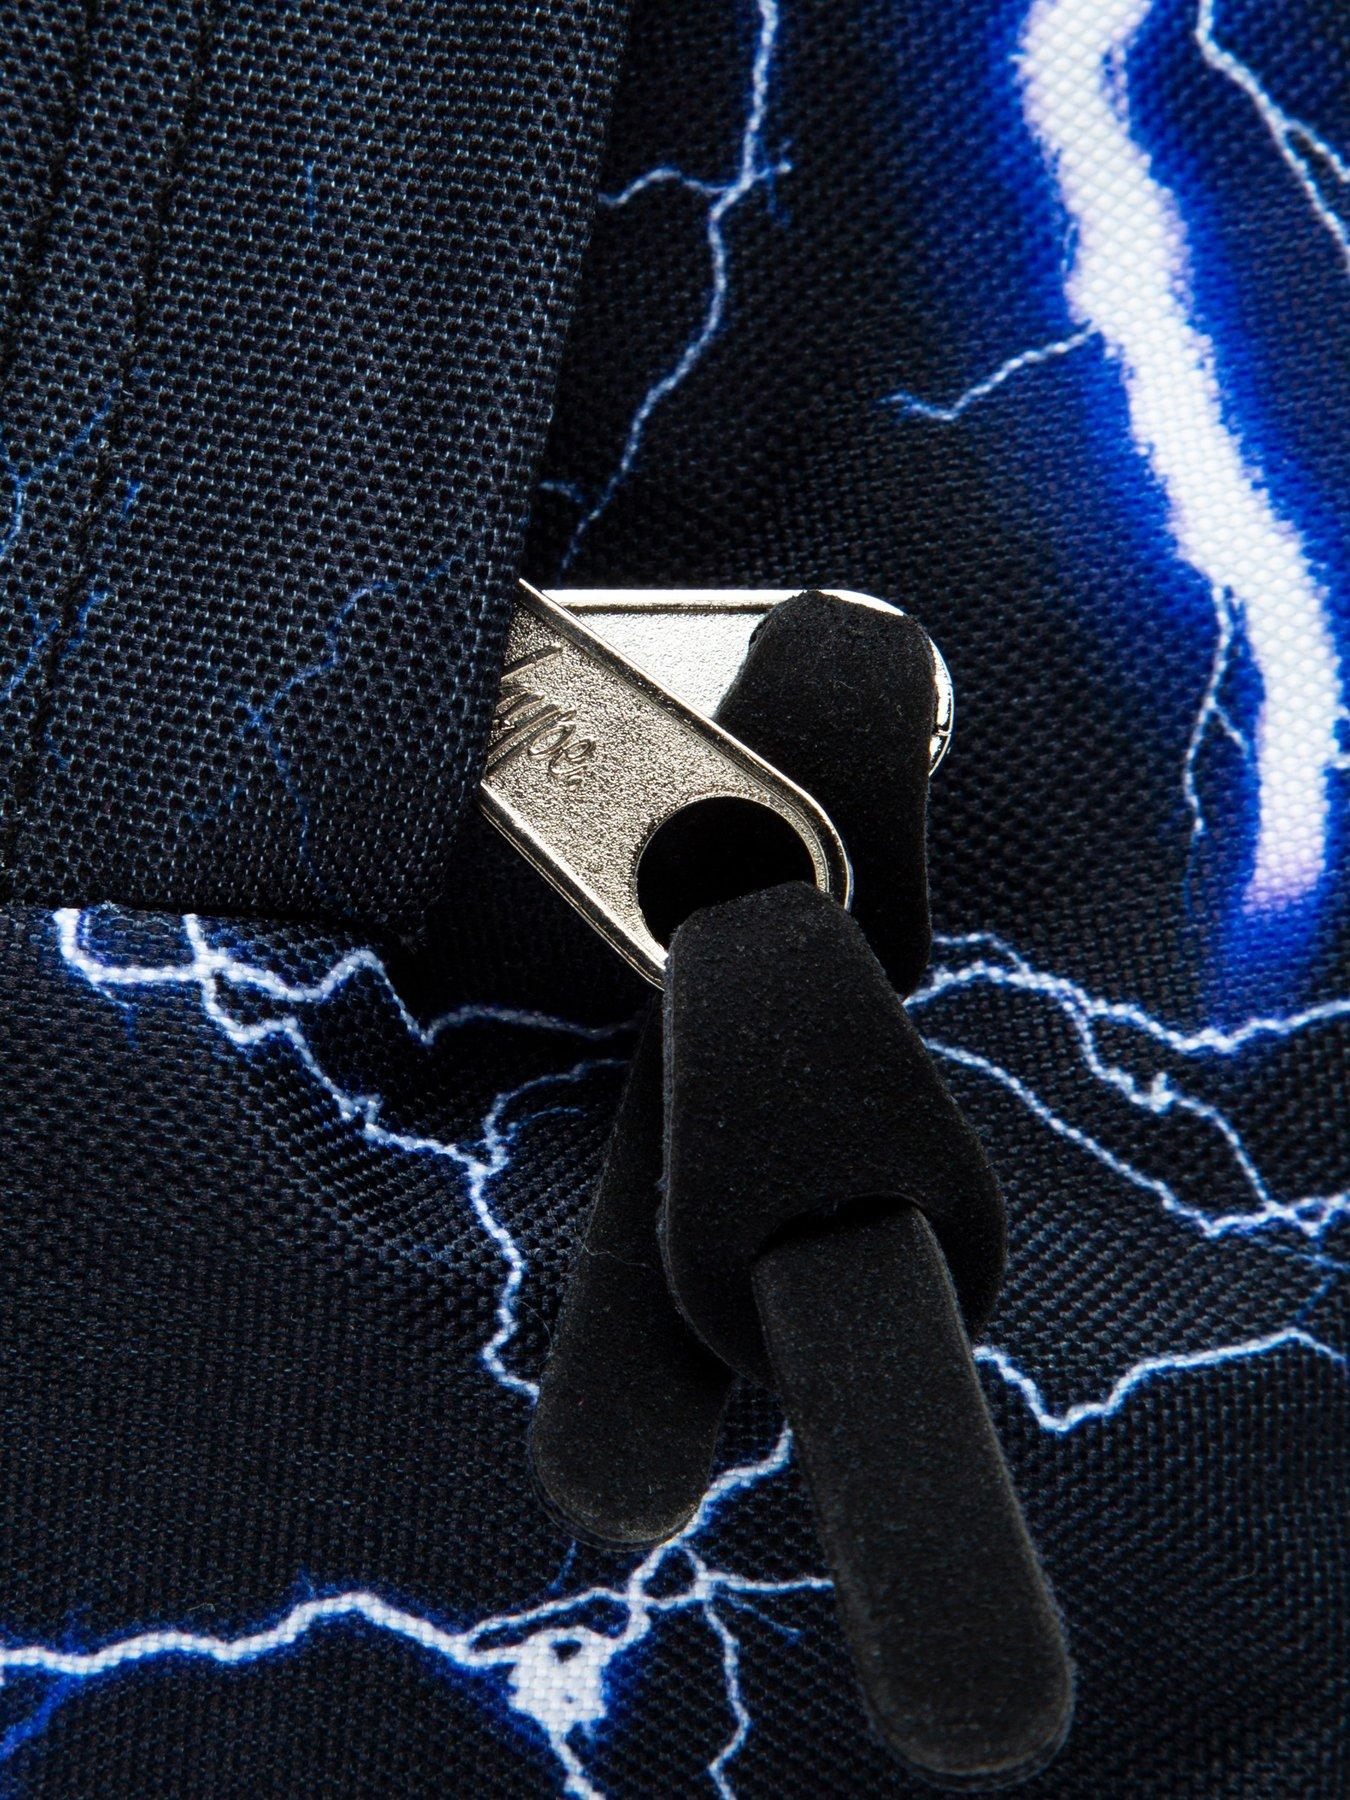  Unisex Lightning Crest Backpack - Black